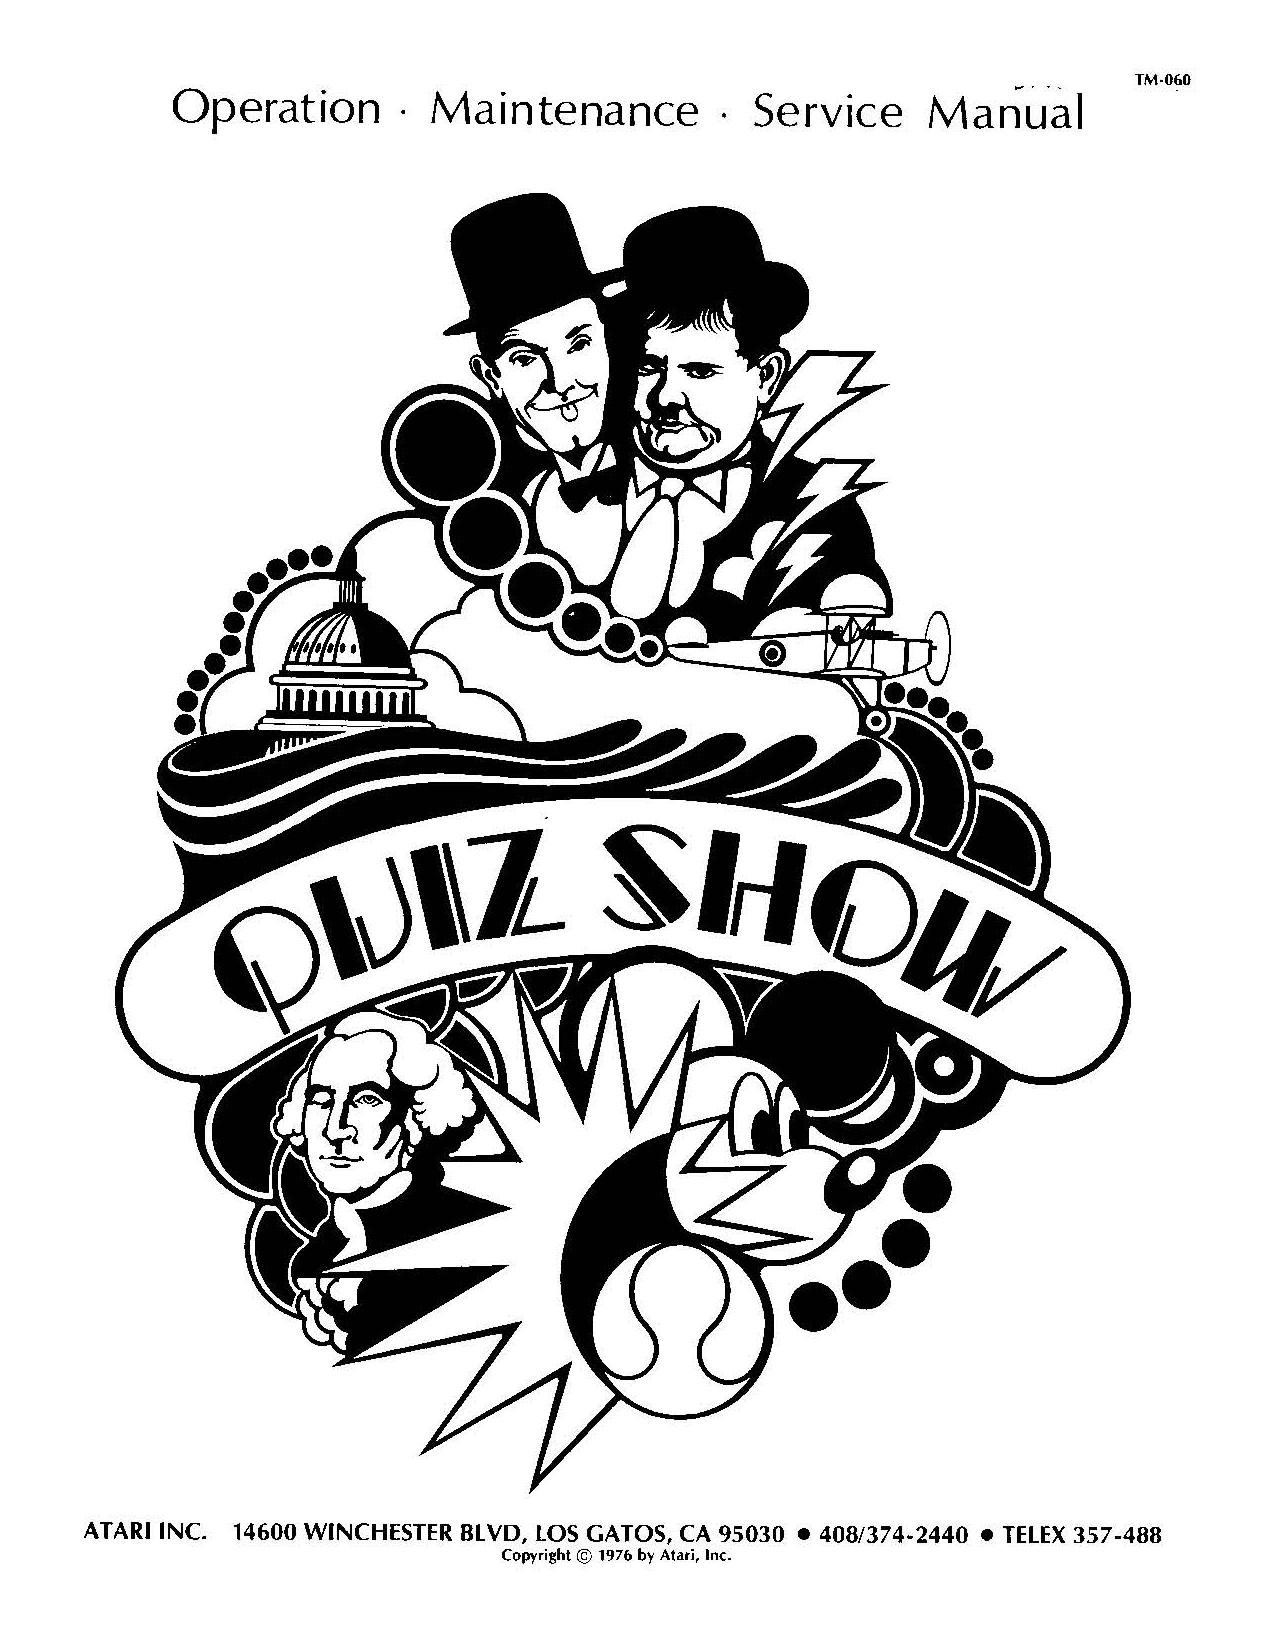 Quiz Show (TM-060) (Op-Maint-Serv) (U)